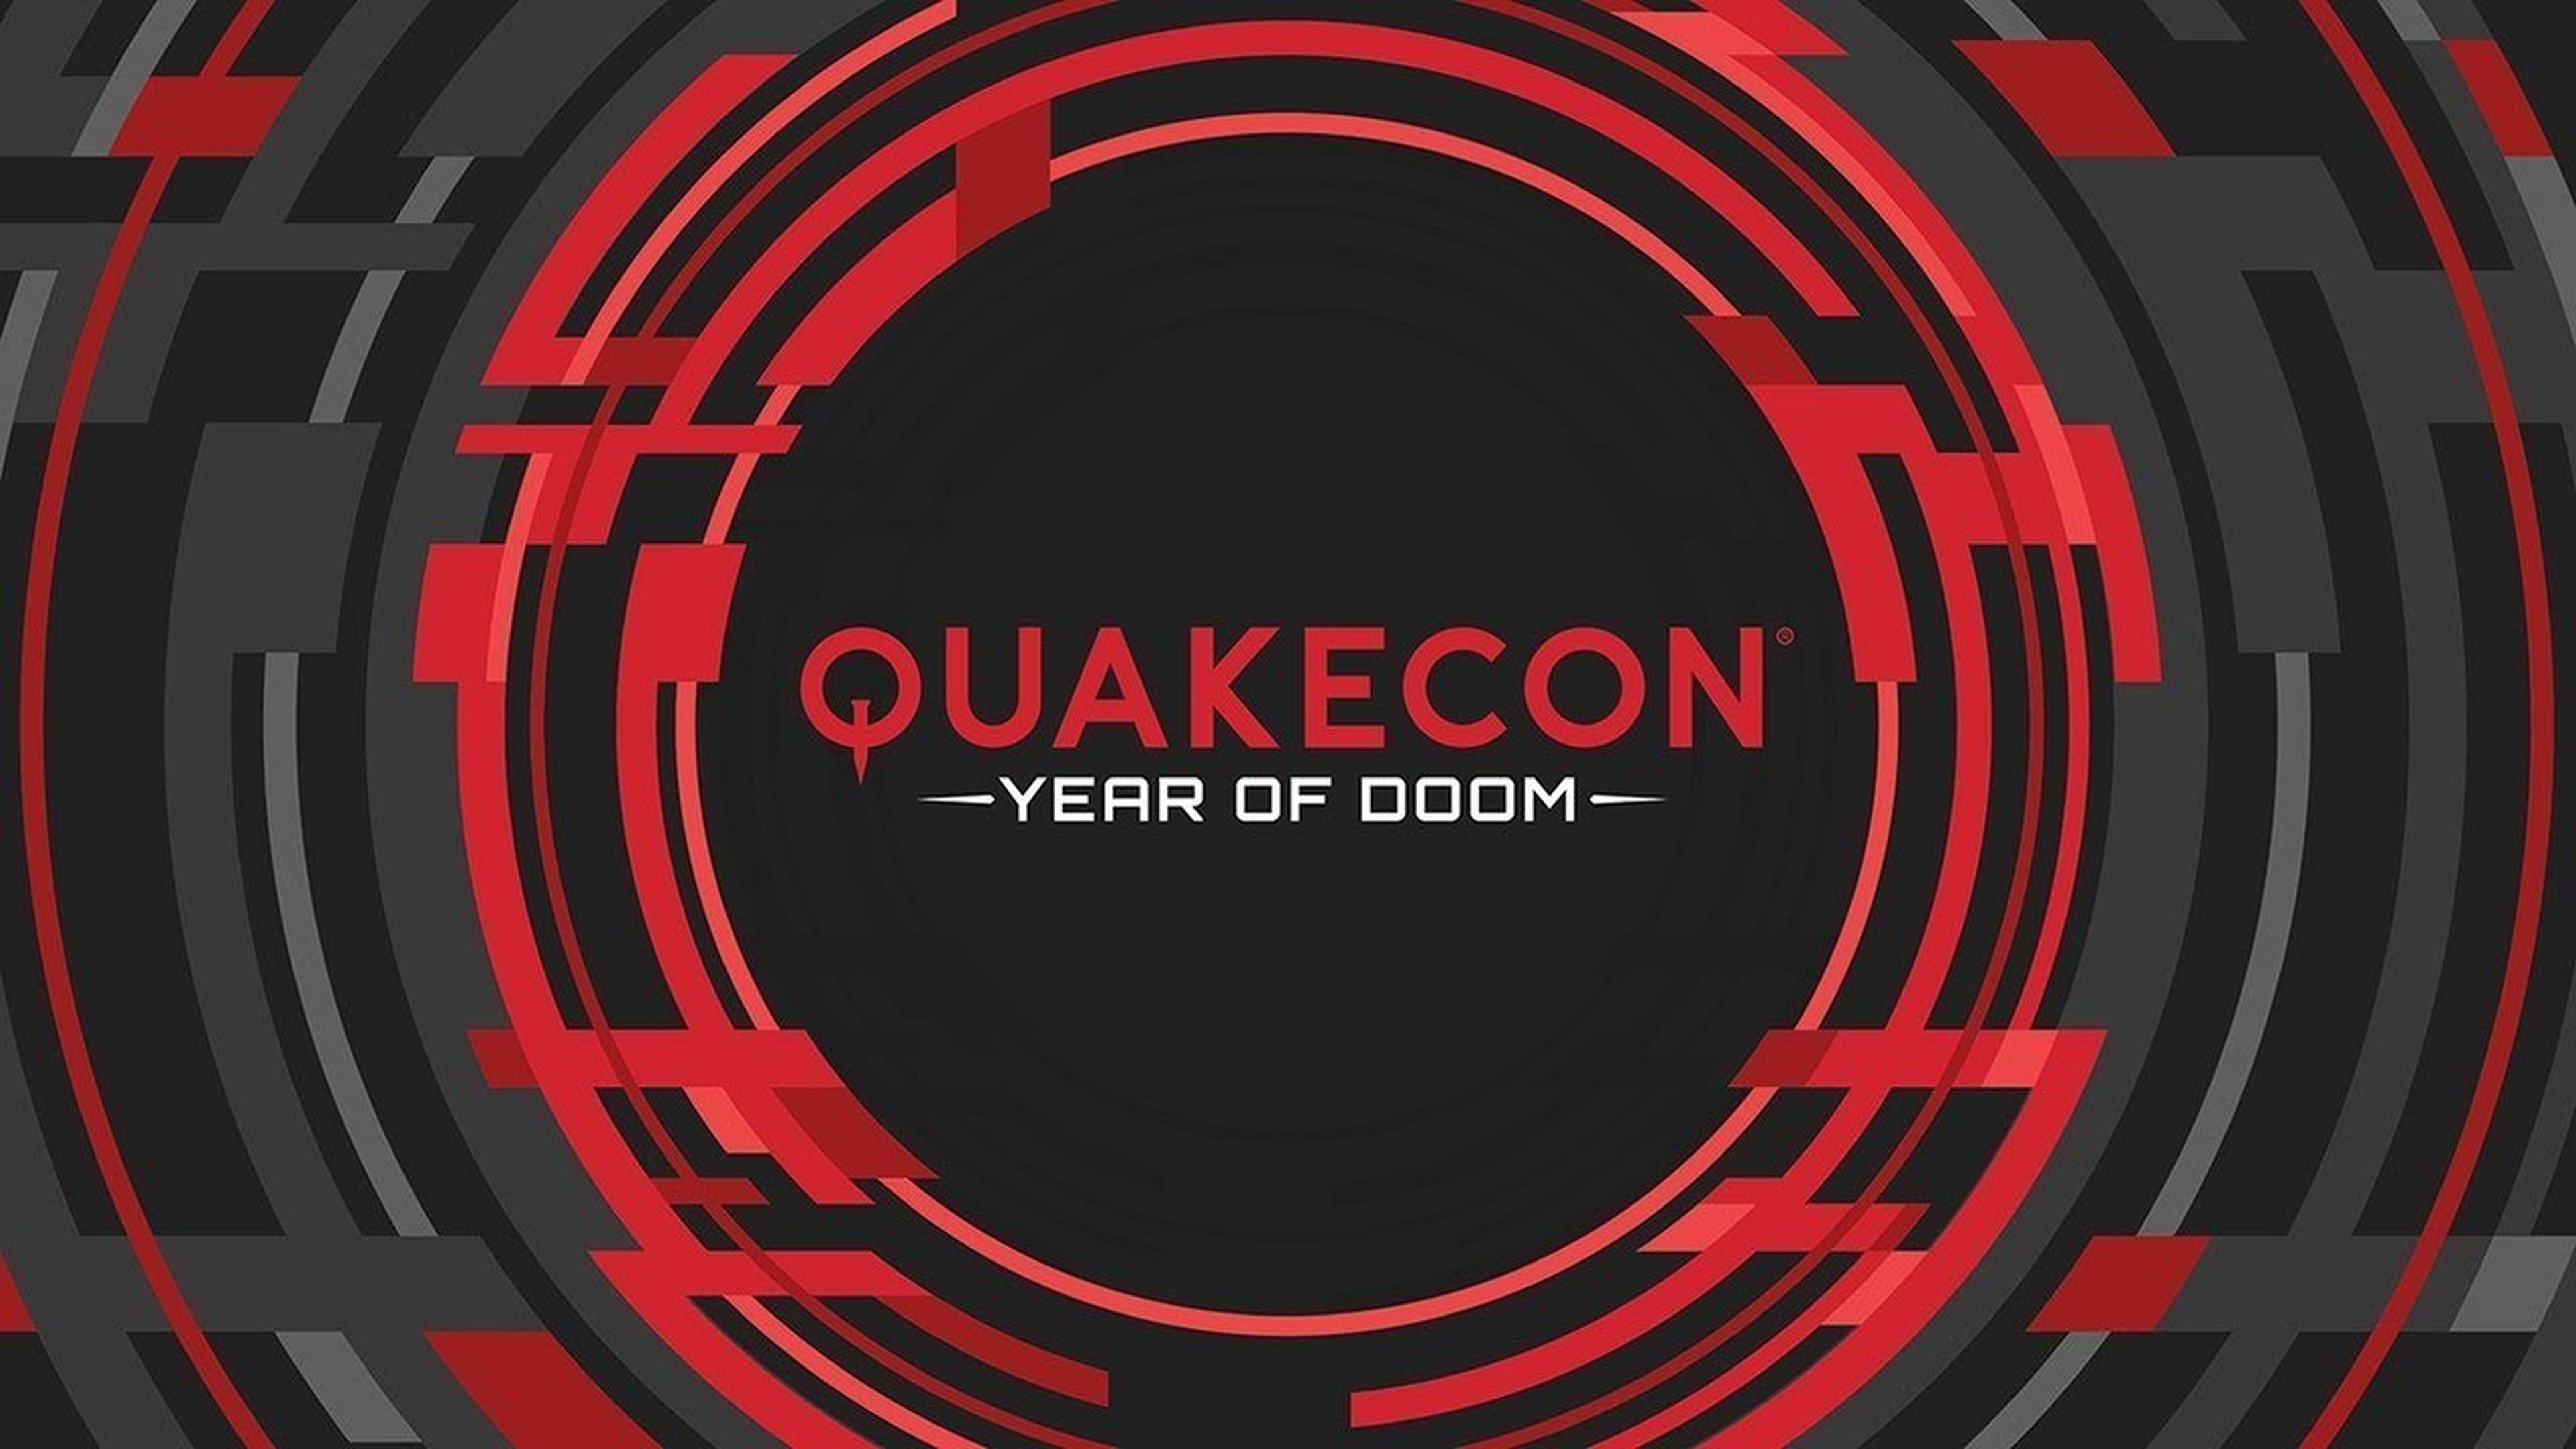 QuakeCon 2019